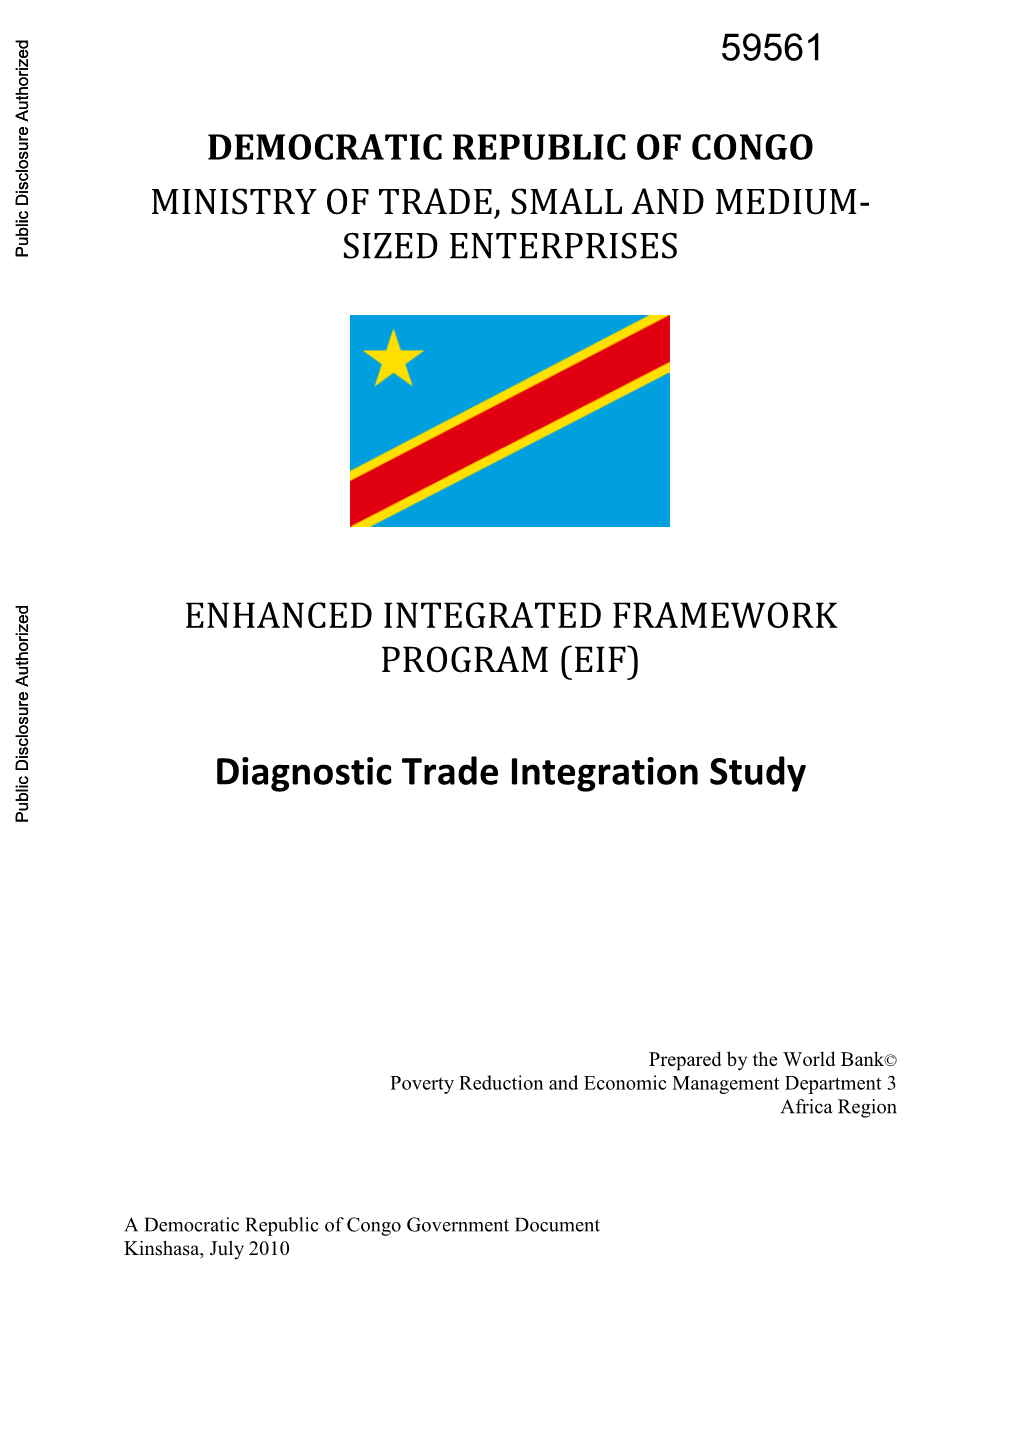 Democratic Republic of Congo Ministry of Trade, Small and Medium